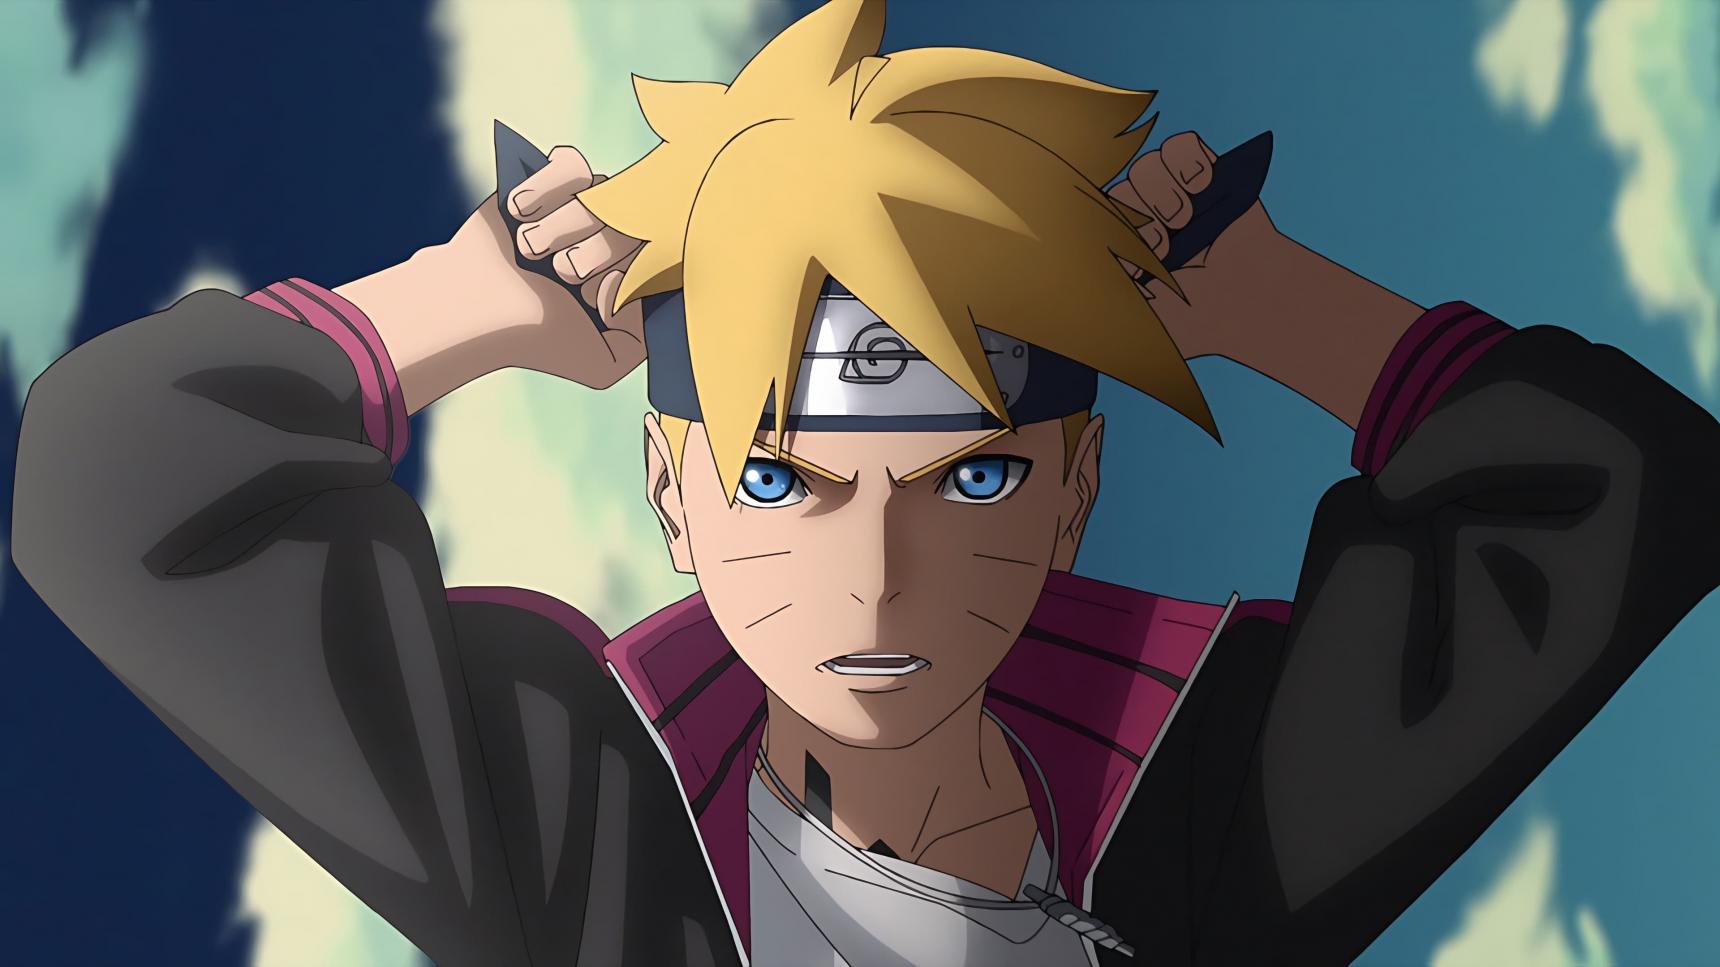 Poster del episodio 293 de Boruto: Naruto Next Generations online